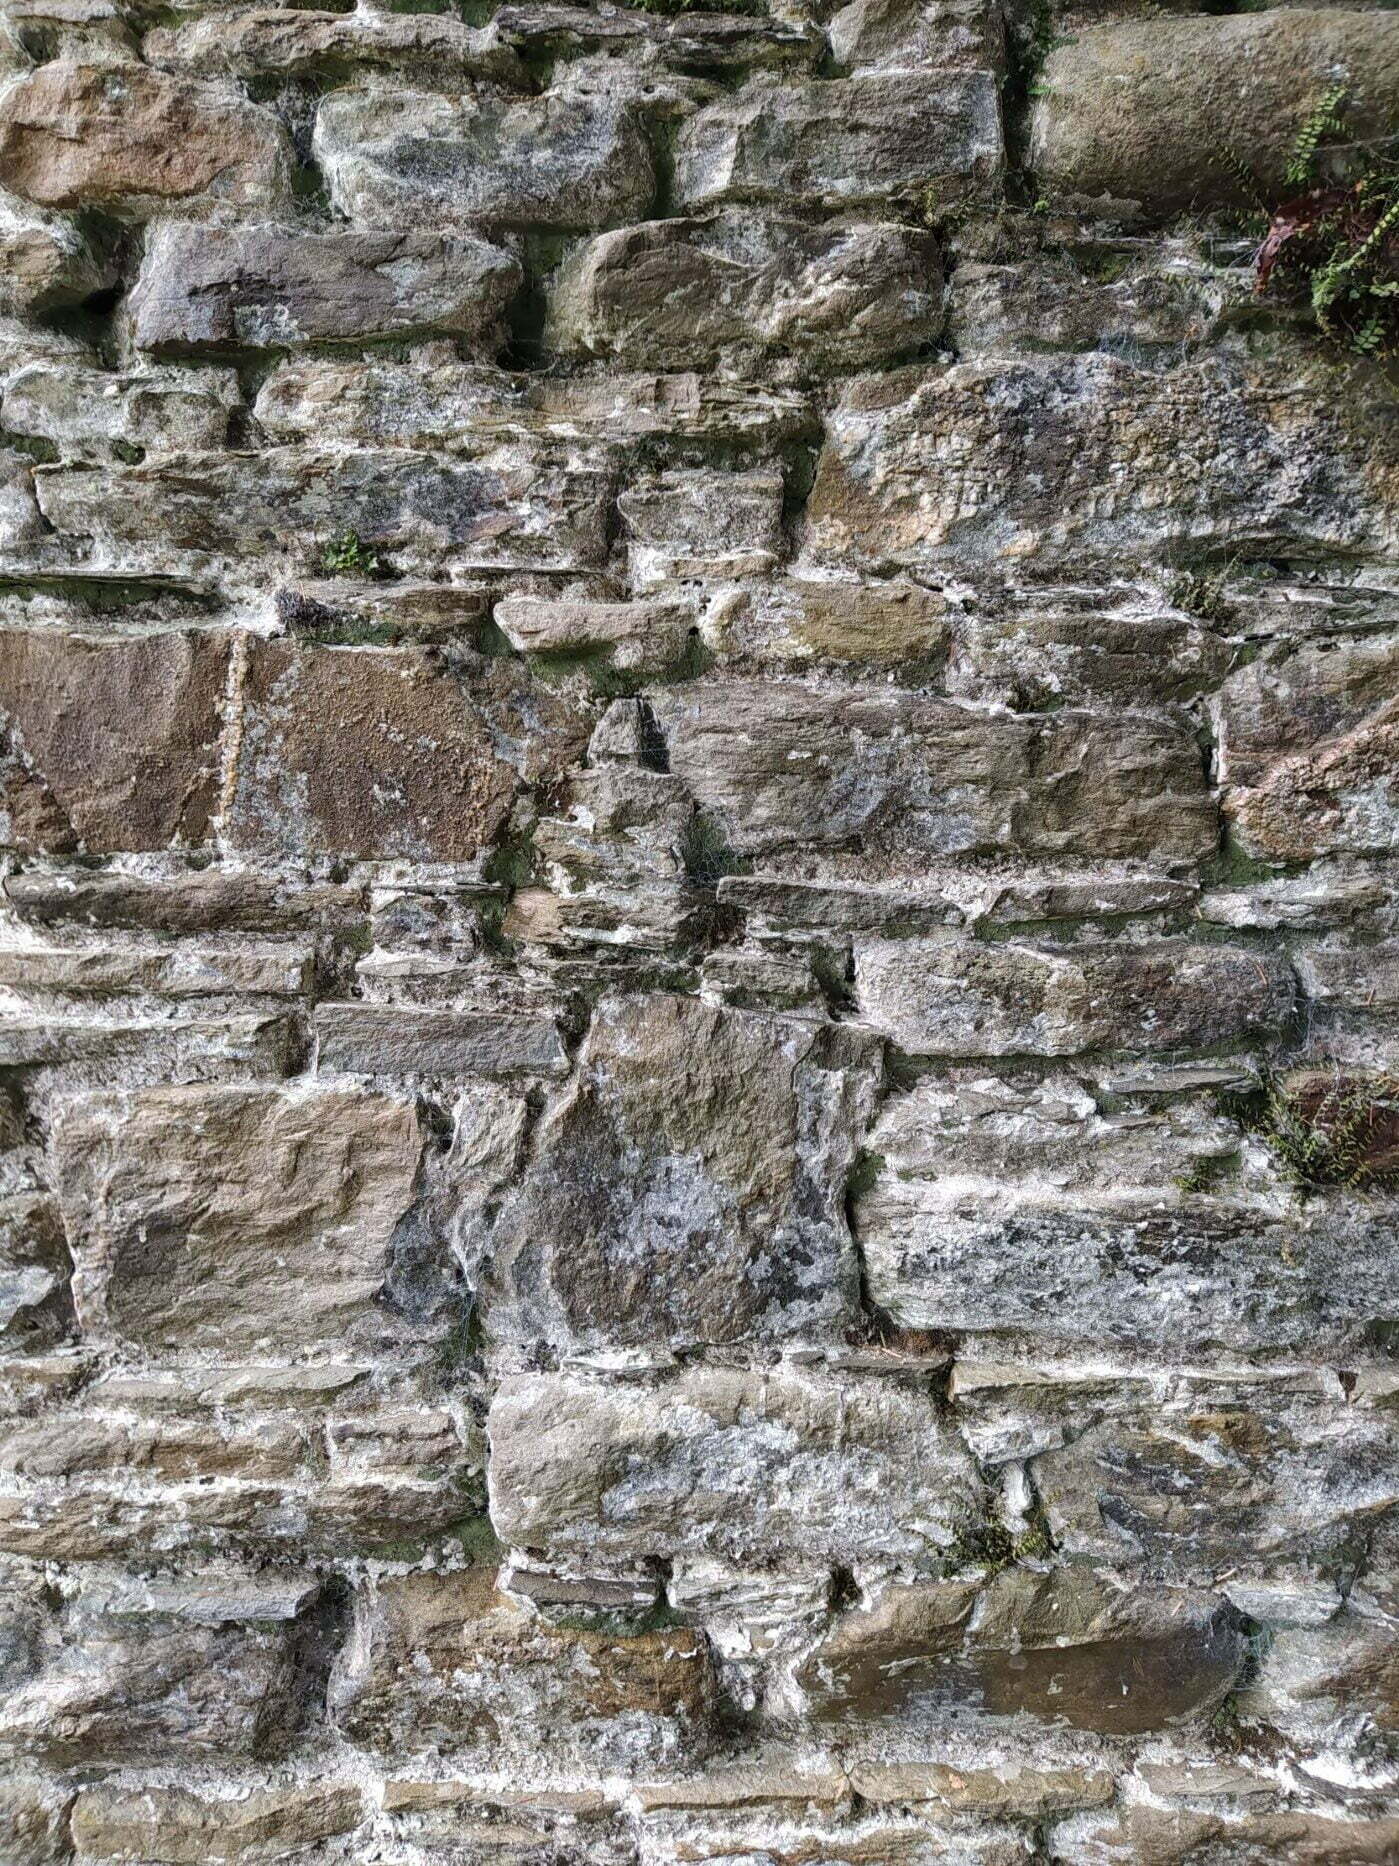 Sample Stonework From Vernacular Sandstone Wall Prior To Restoration